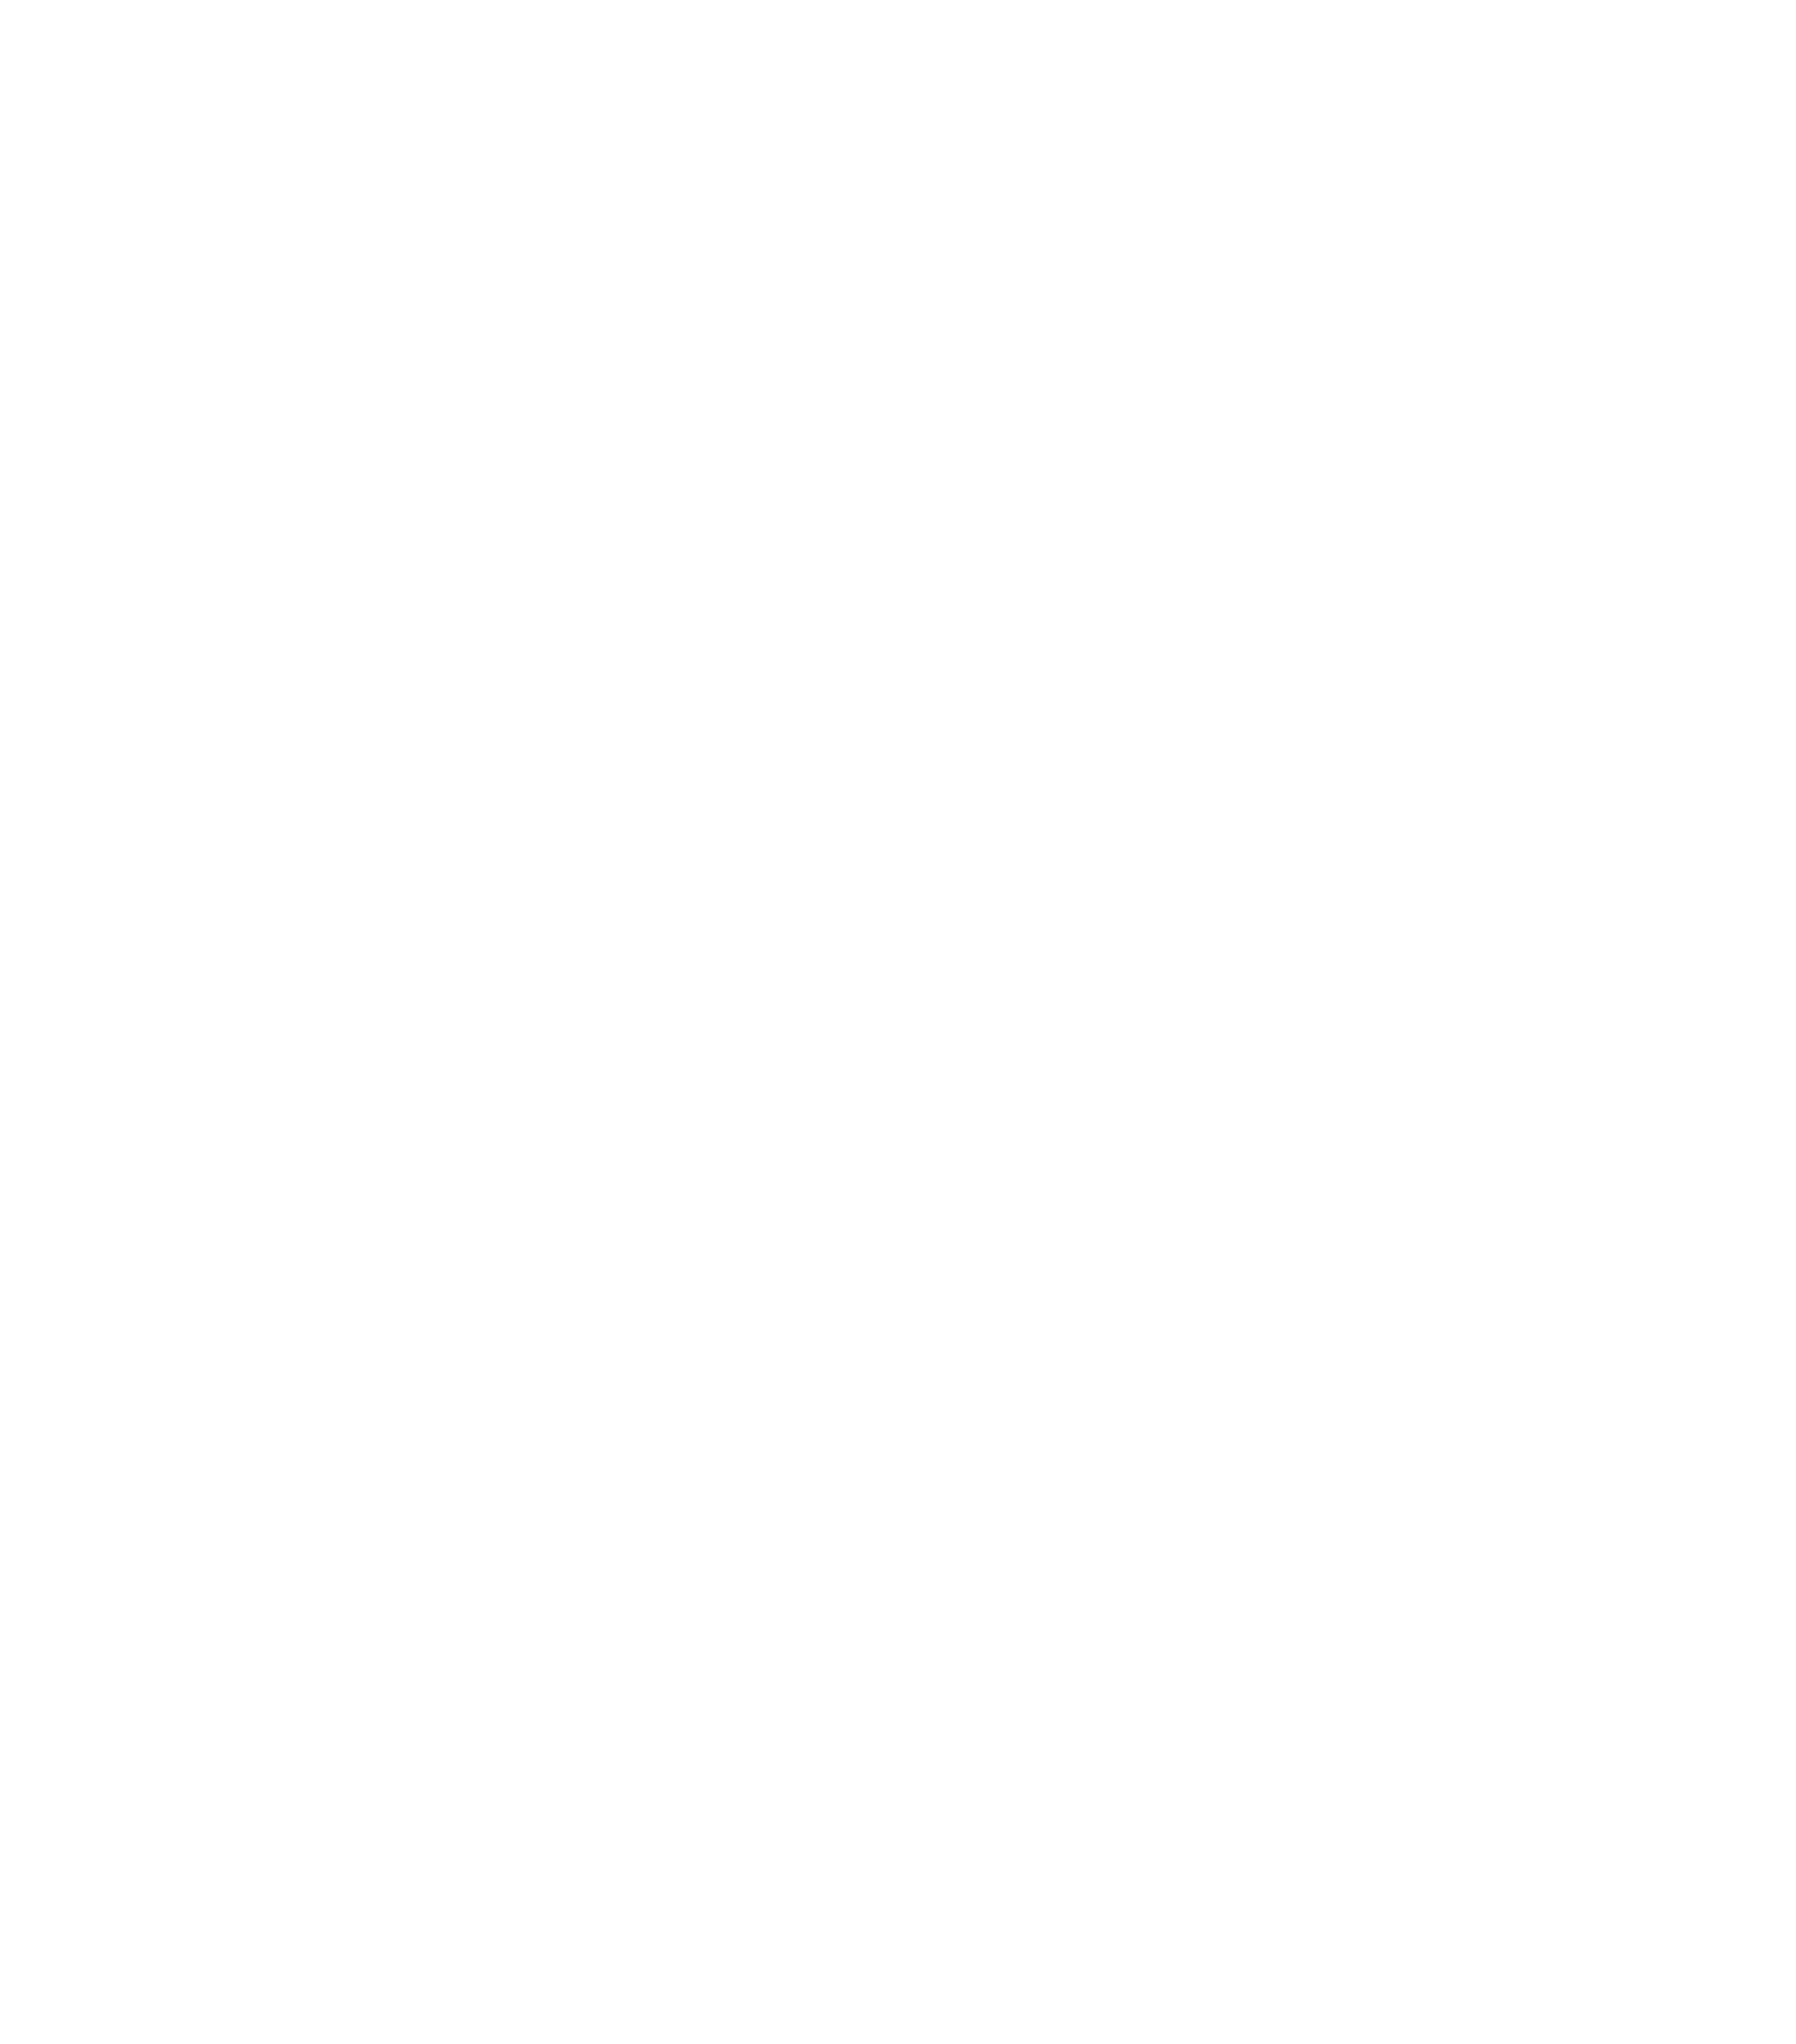 LITTLE BEAR | FINE COFFEE AND STUFF | Albuquerque, NM